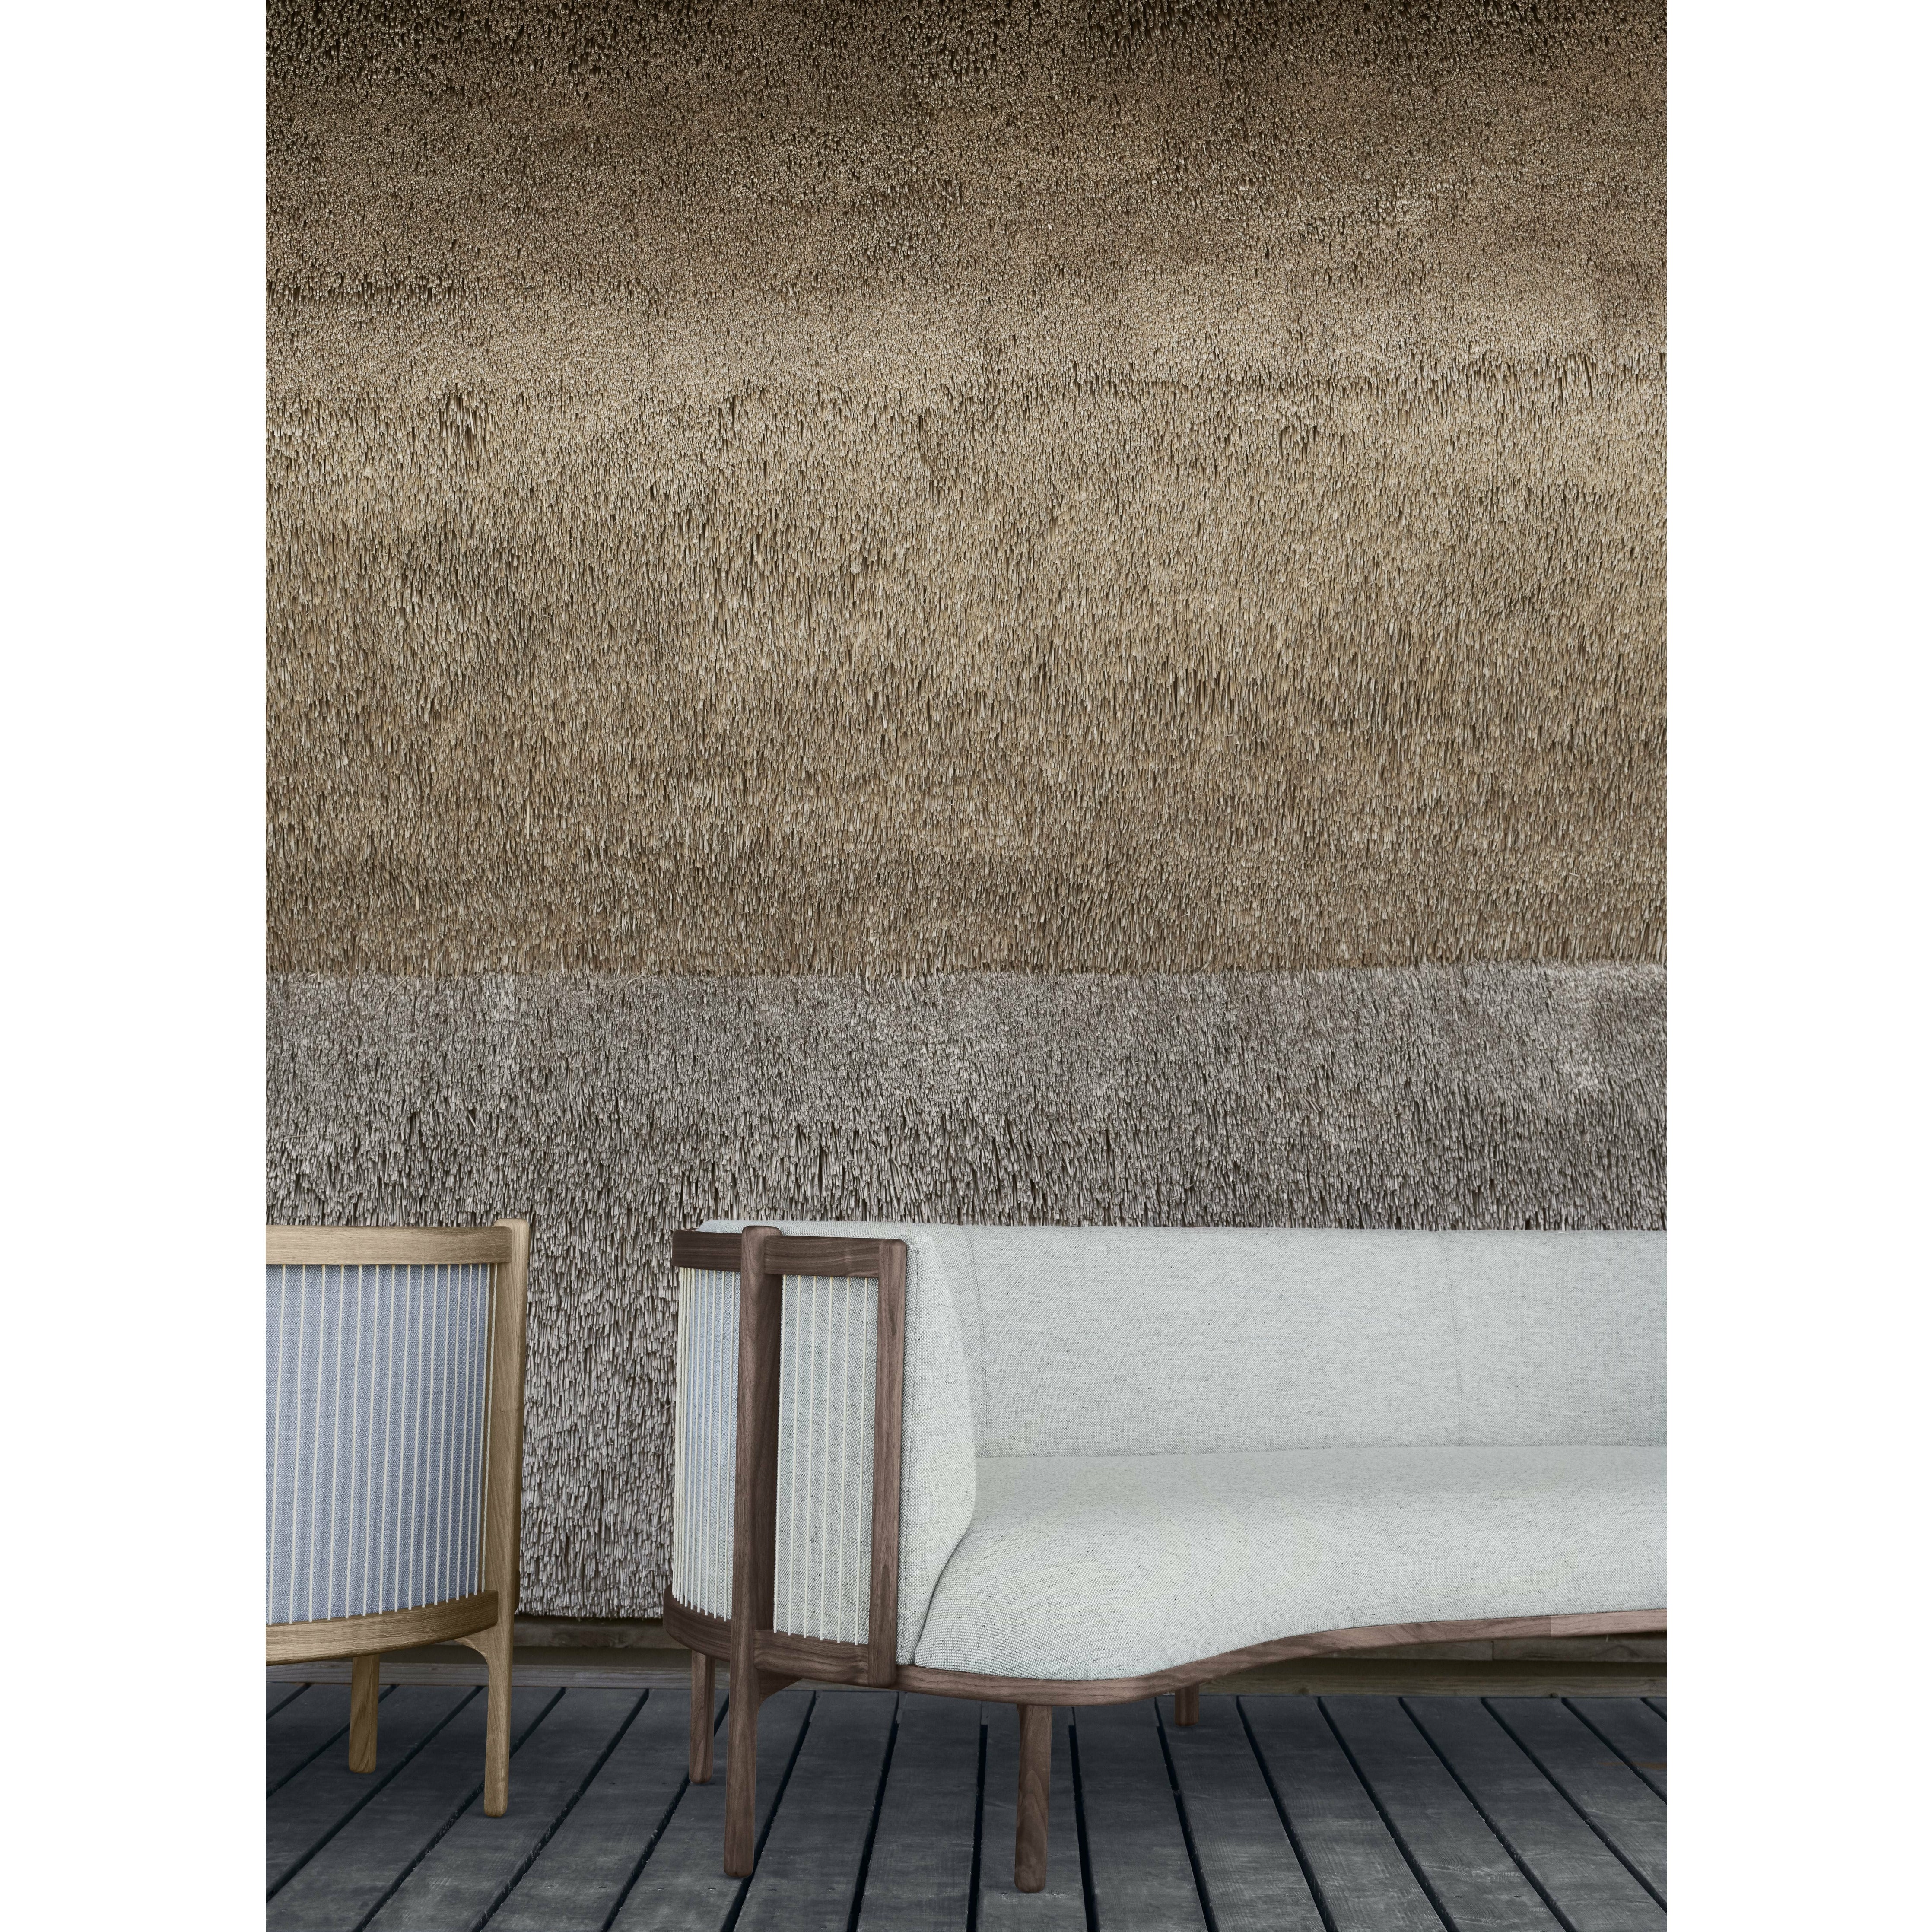 Carl Hansen Rf1903 R Sideways Sofa 3 Seater Right Oak Oil/Hallingdal 100 Fabric, White/Natural Brown